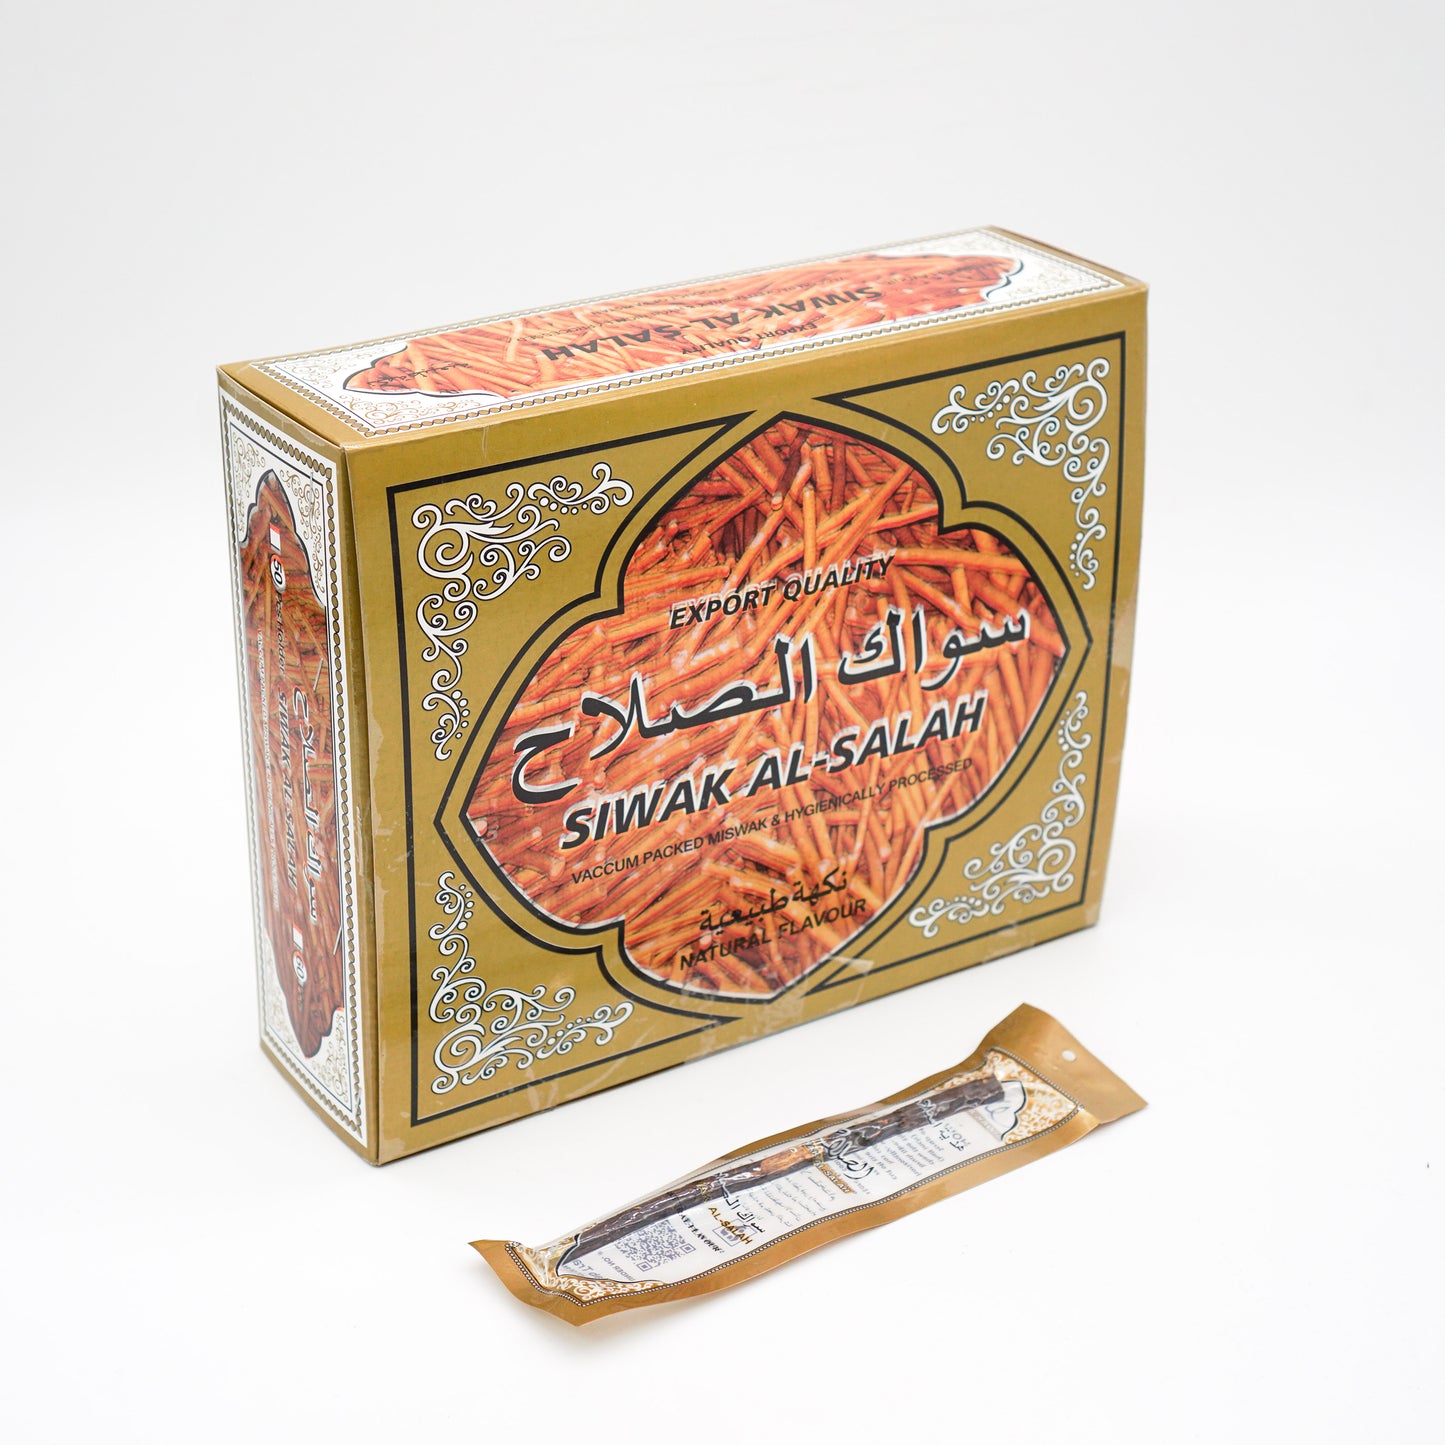 Olive Miswak Siwak al-salah One Box (60 Pieces)